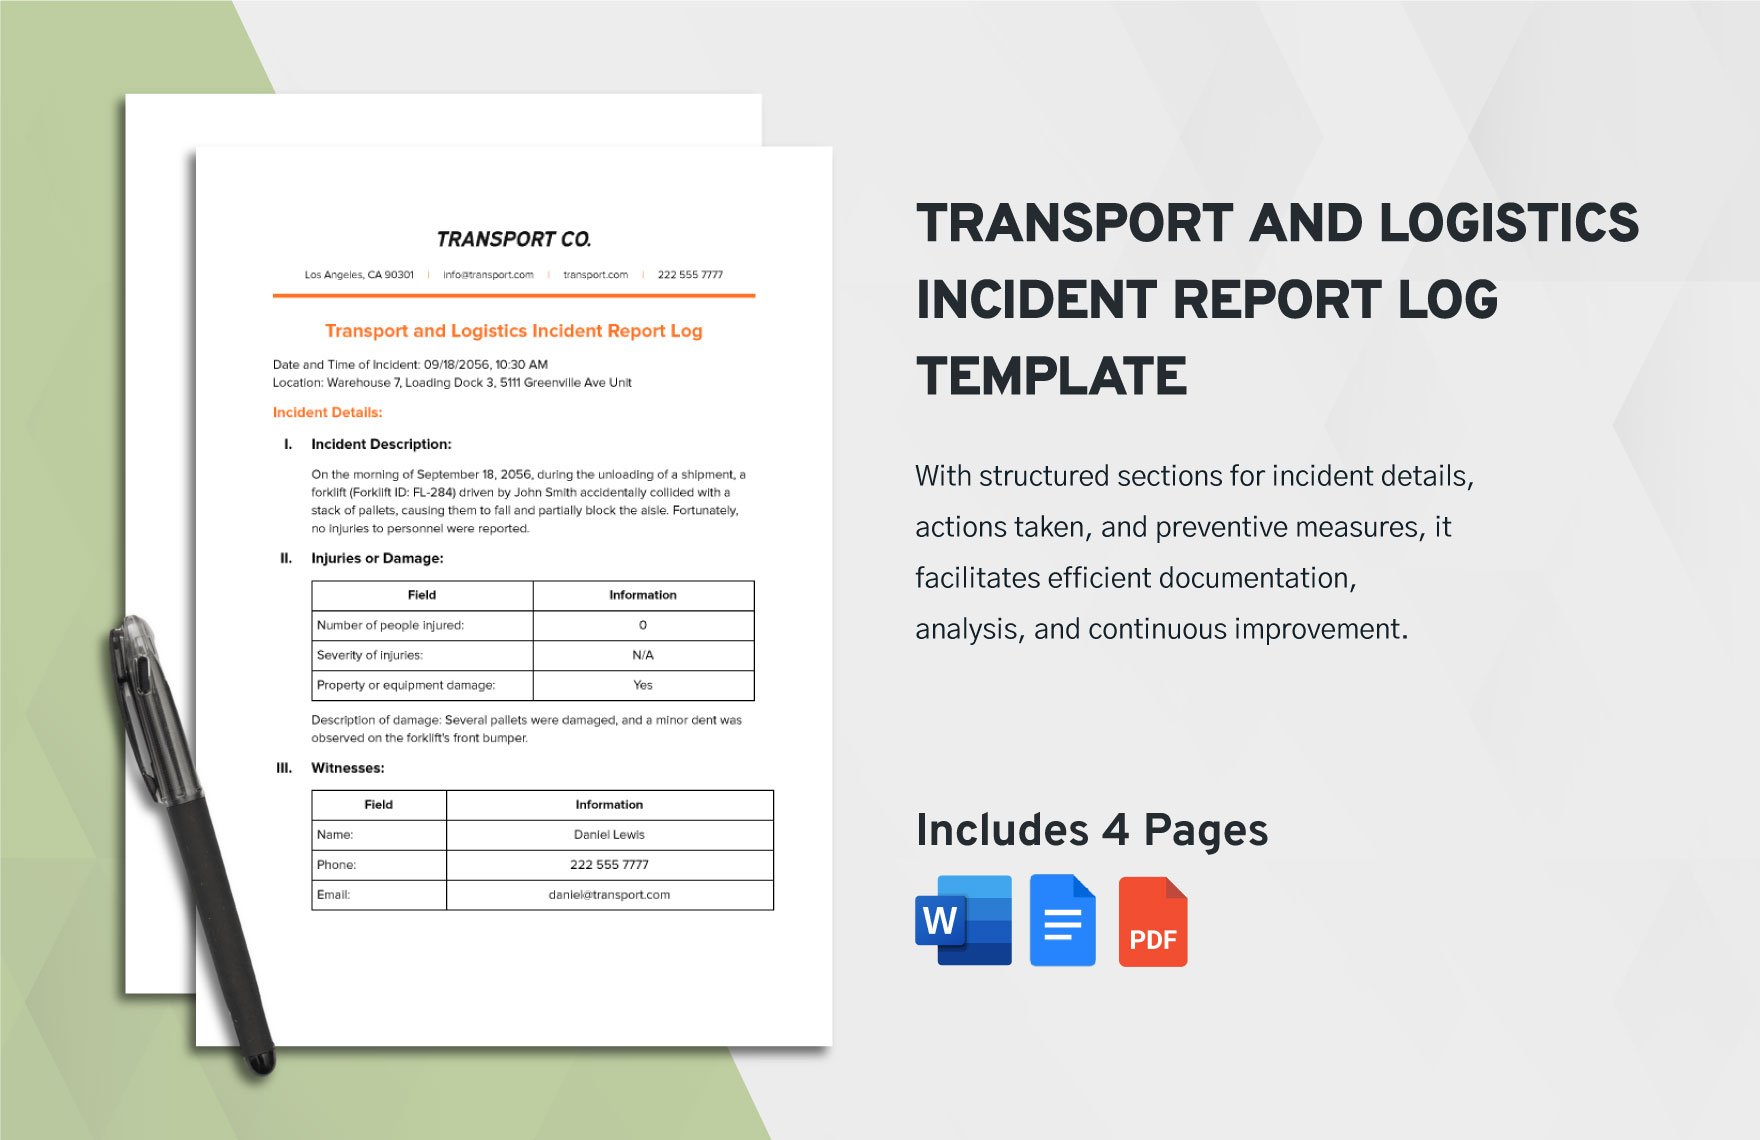 Transport and Logistics Incident Report Log Template